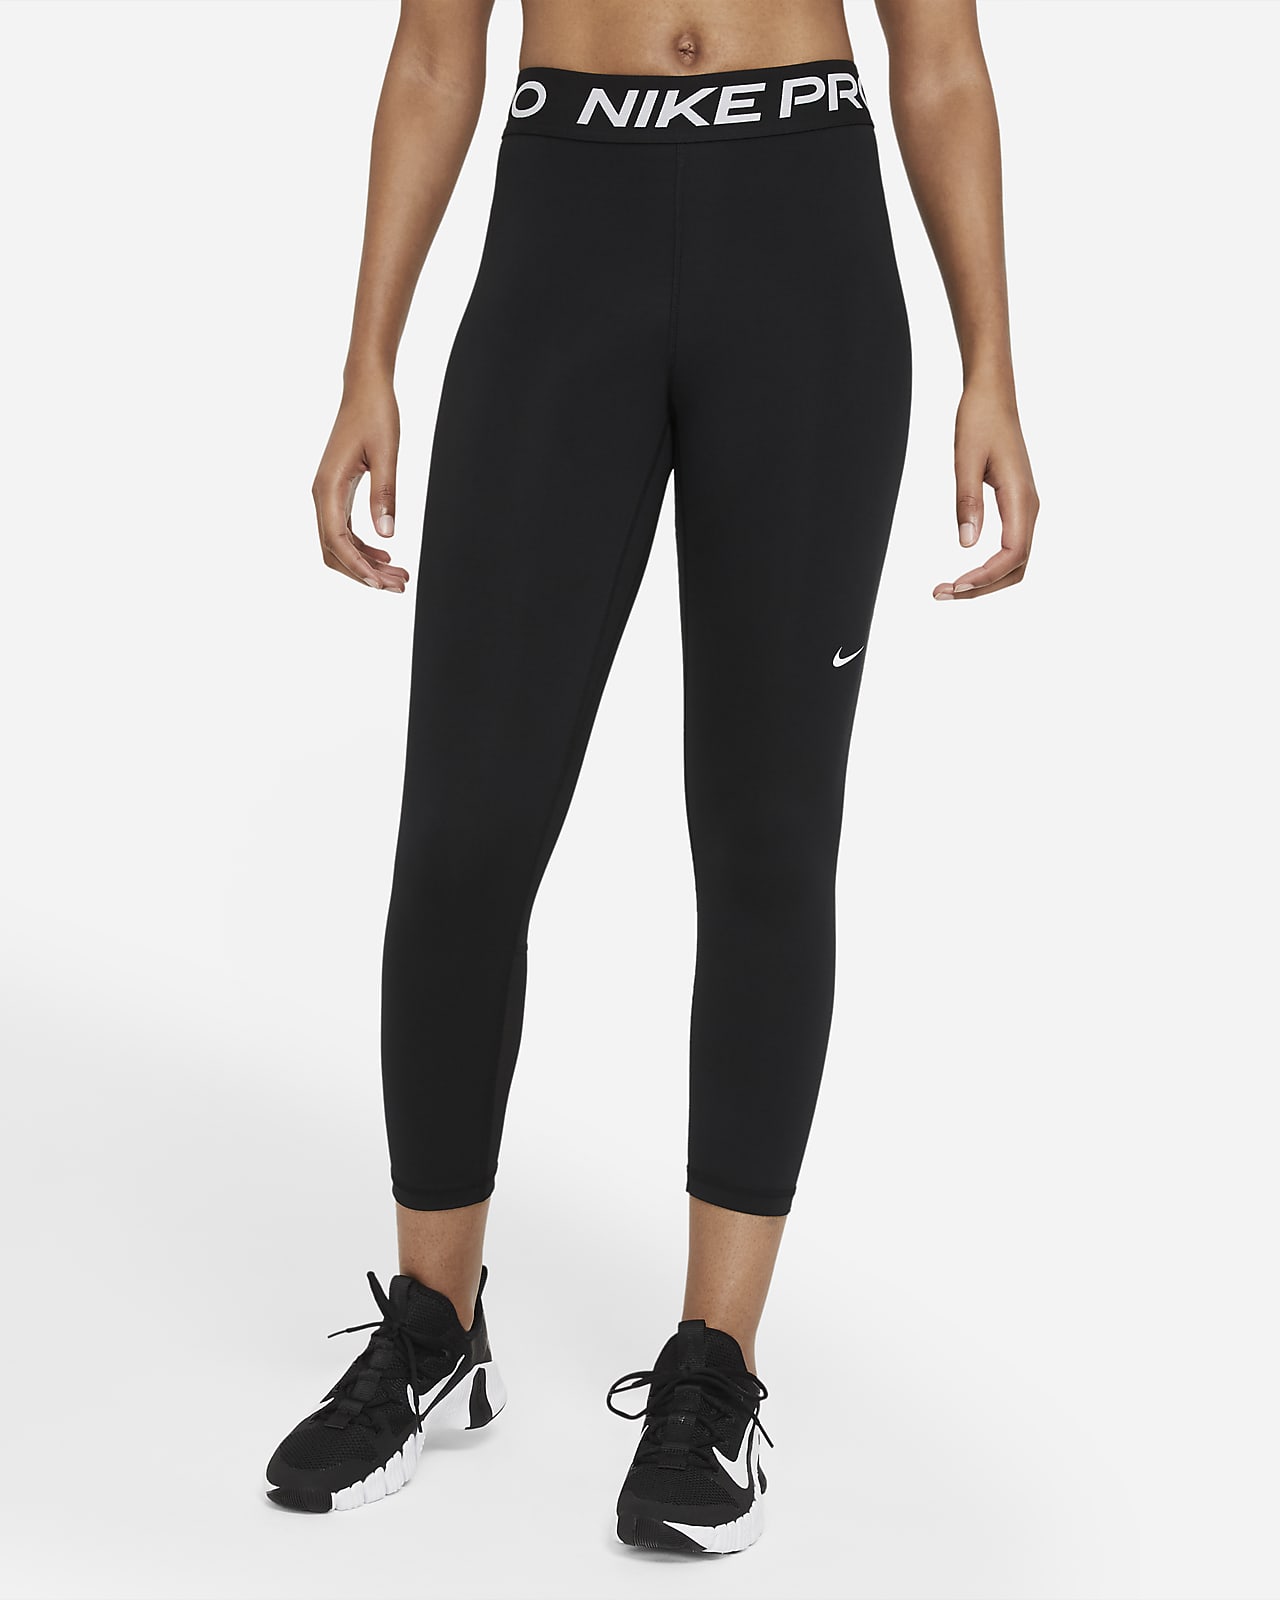 Leggings con paneles de malla cropped de medio para mujer Nike 365. Nike.com